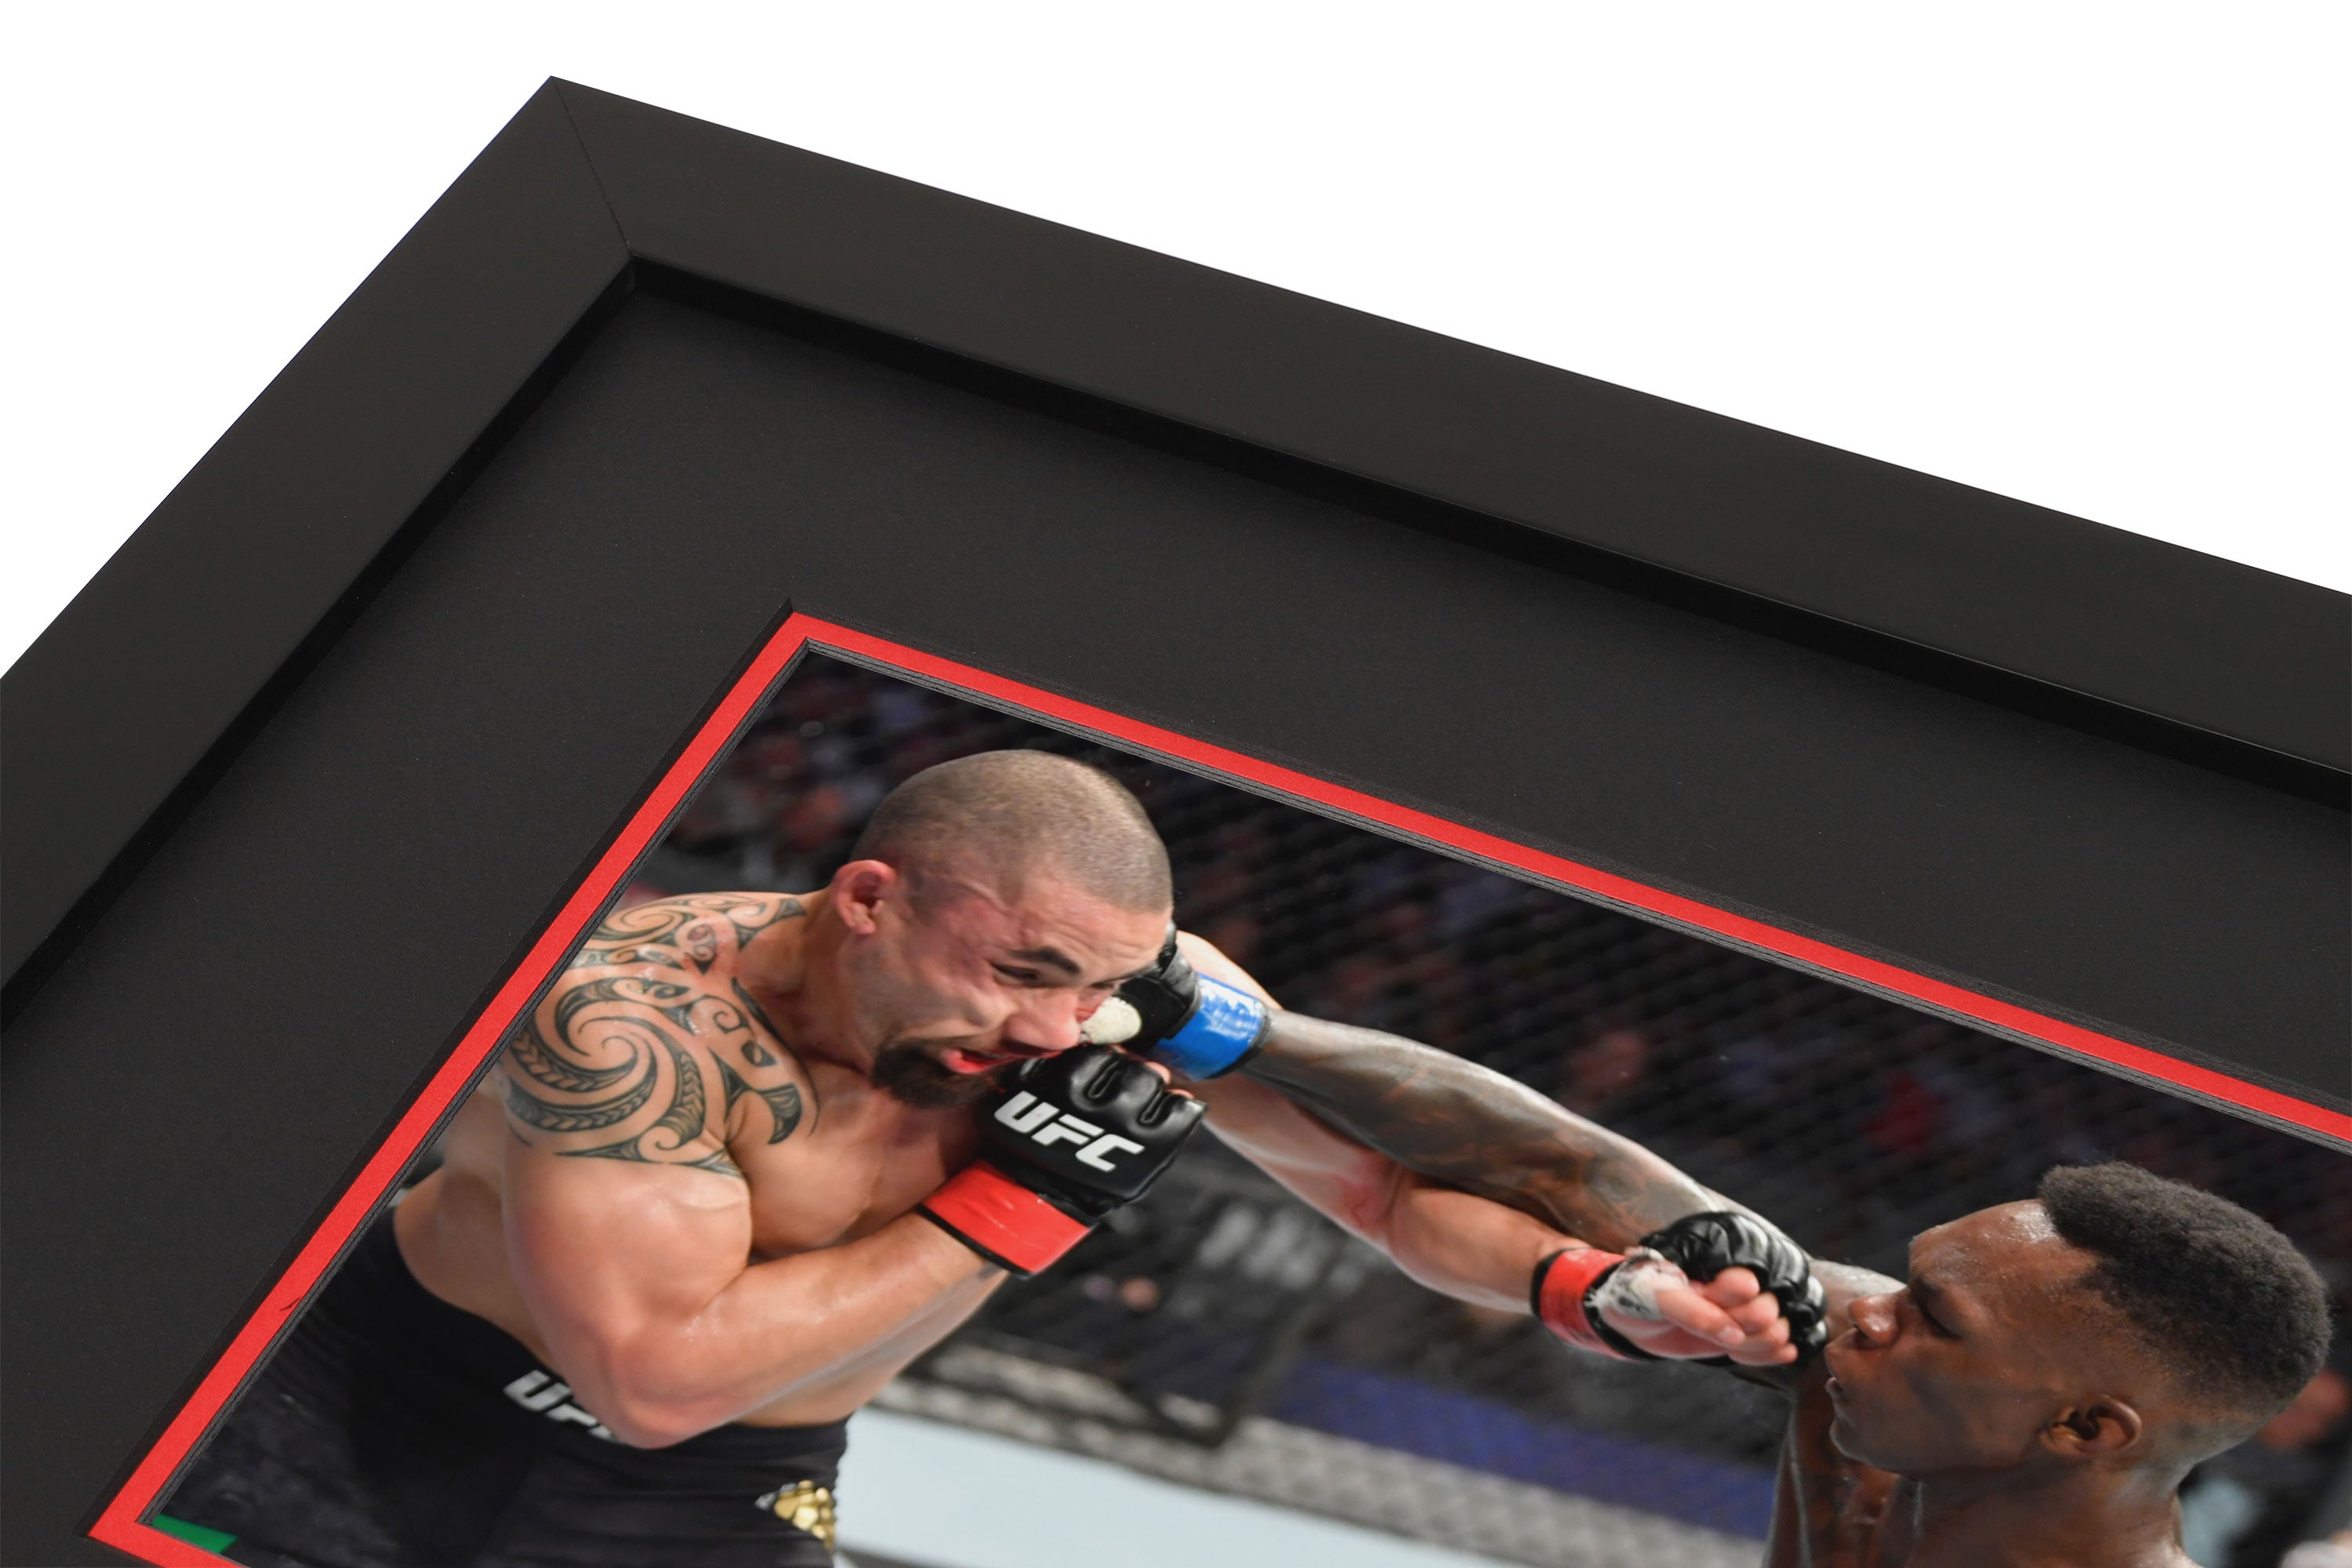 UFC 243: Whittaker vs Adesanya Canvas & Photo - Whittaker vs Adesanya